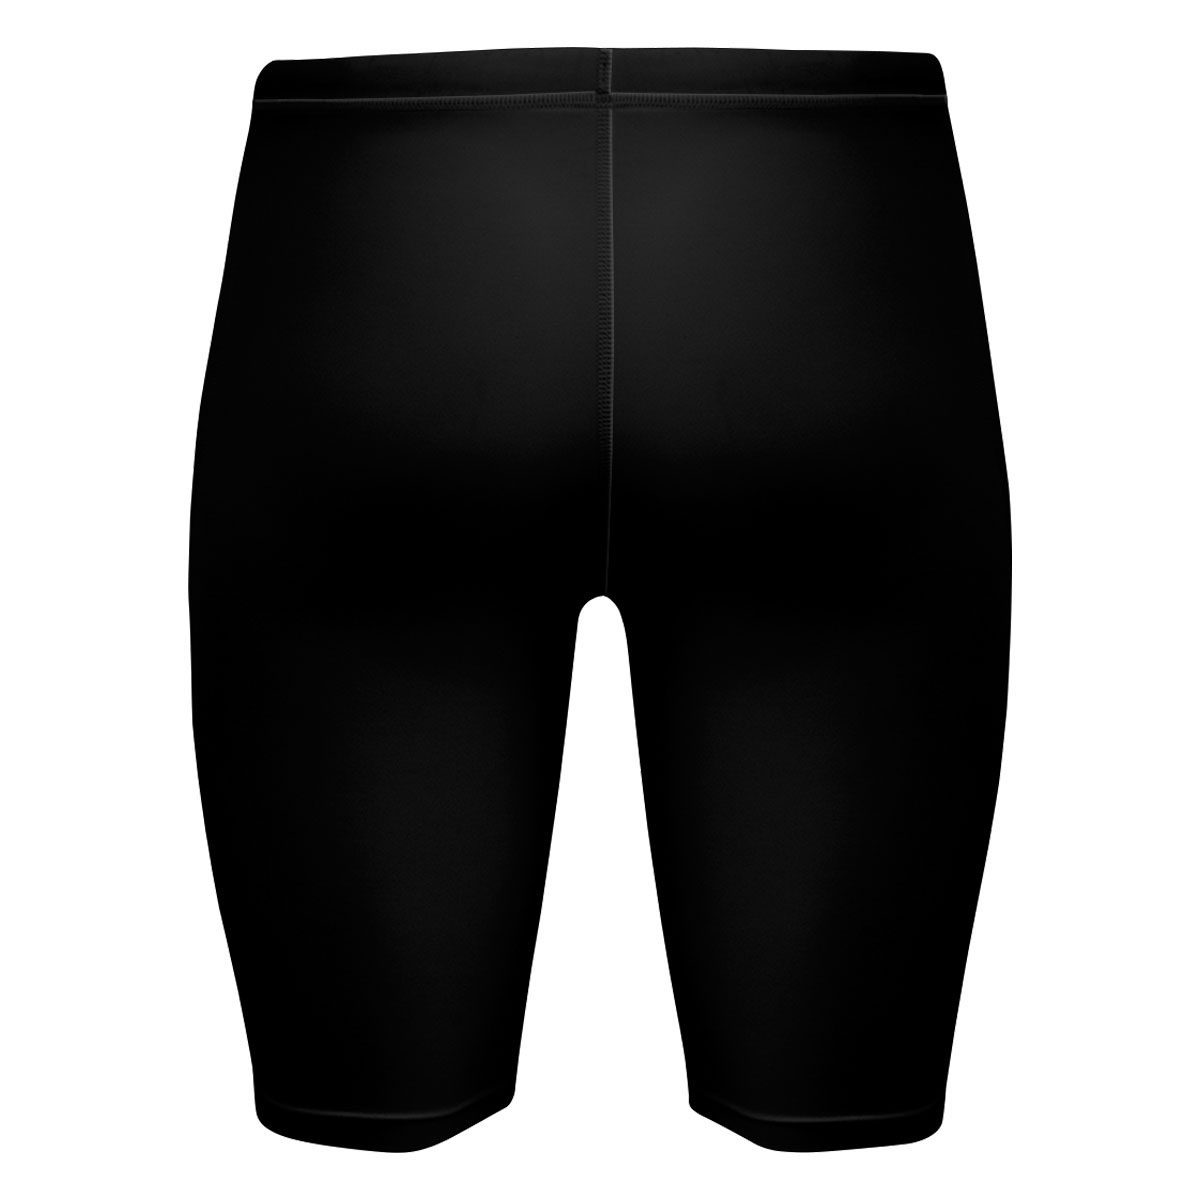 Mens Compression Shorts - Black - Blackchrome